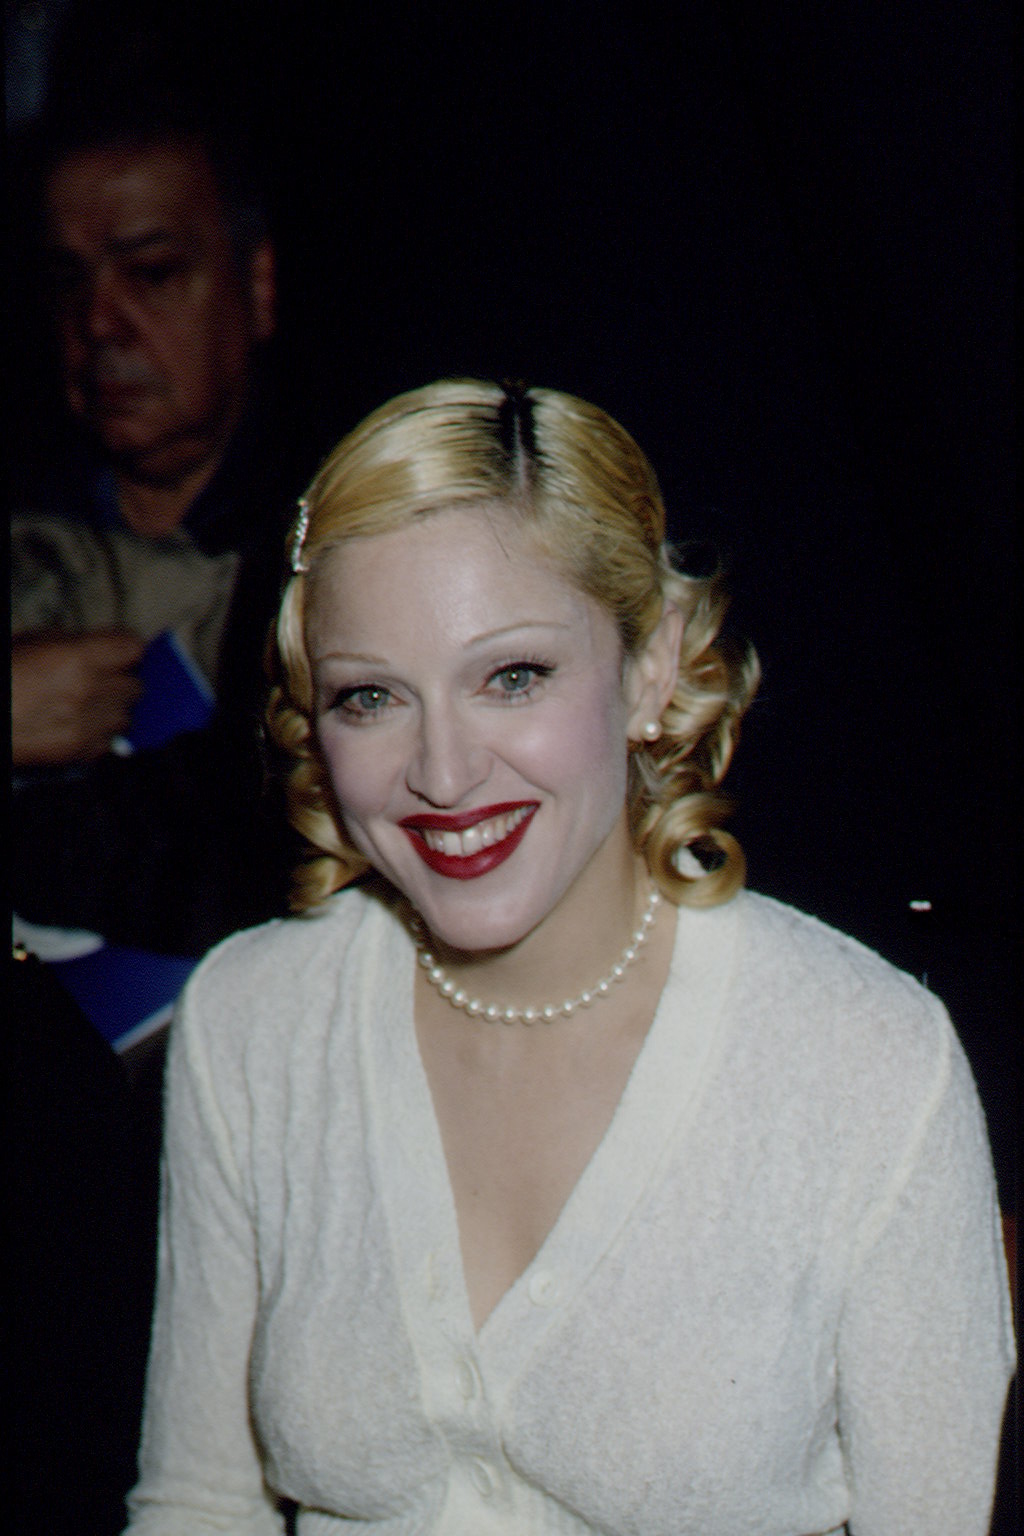 A closeup of Madonna smiling